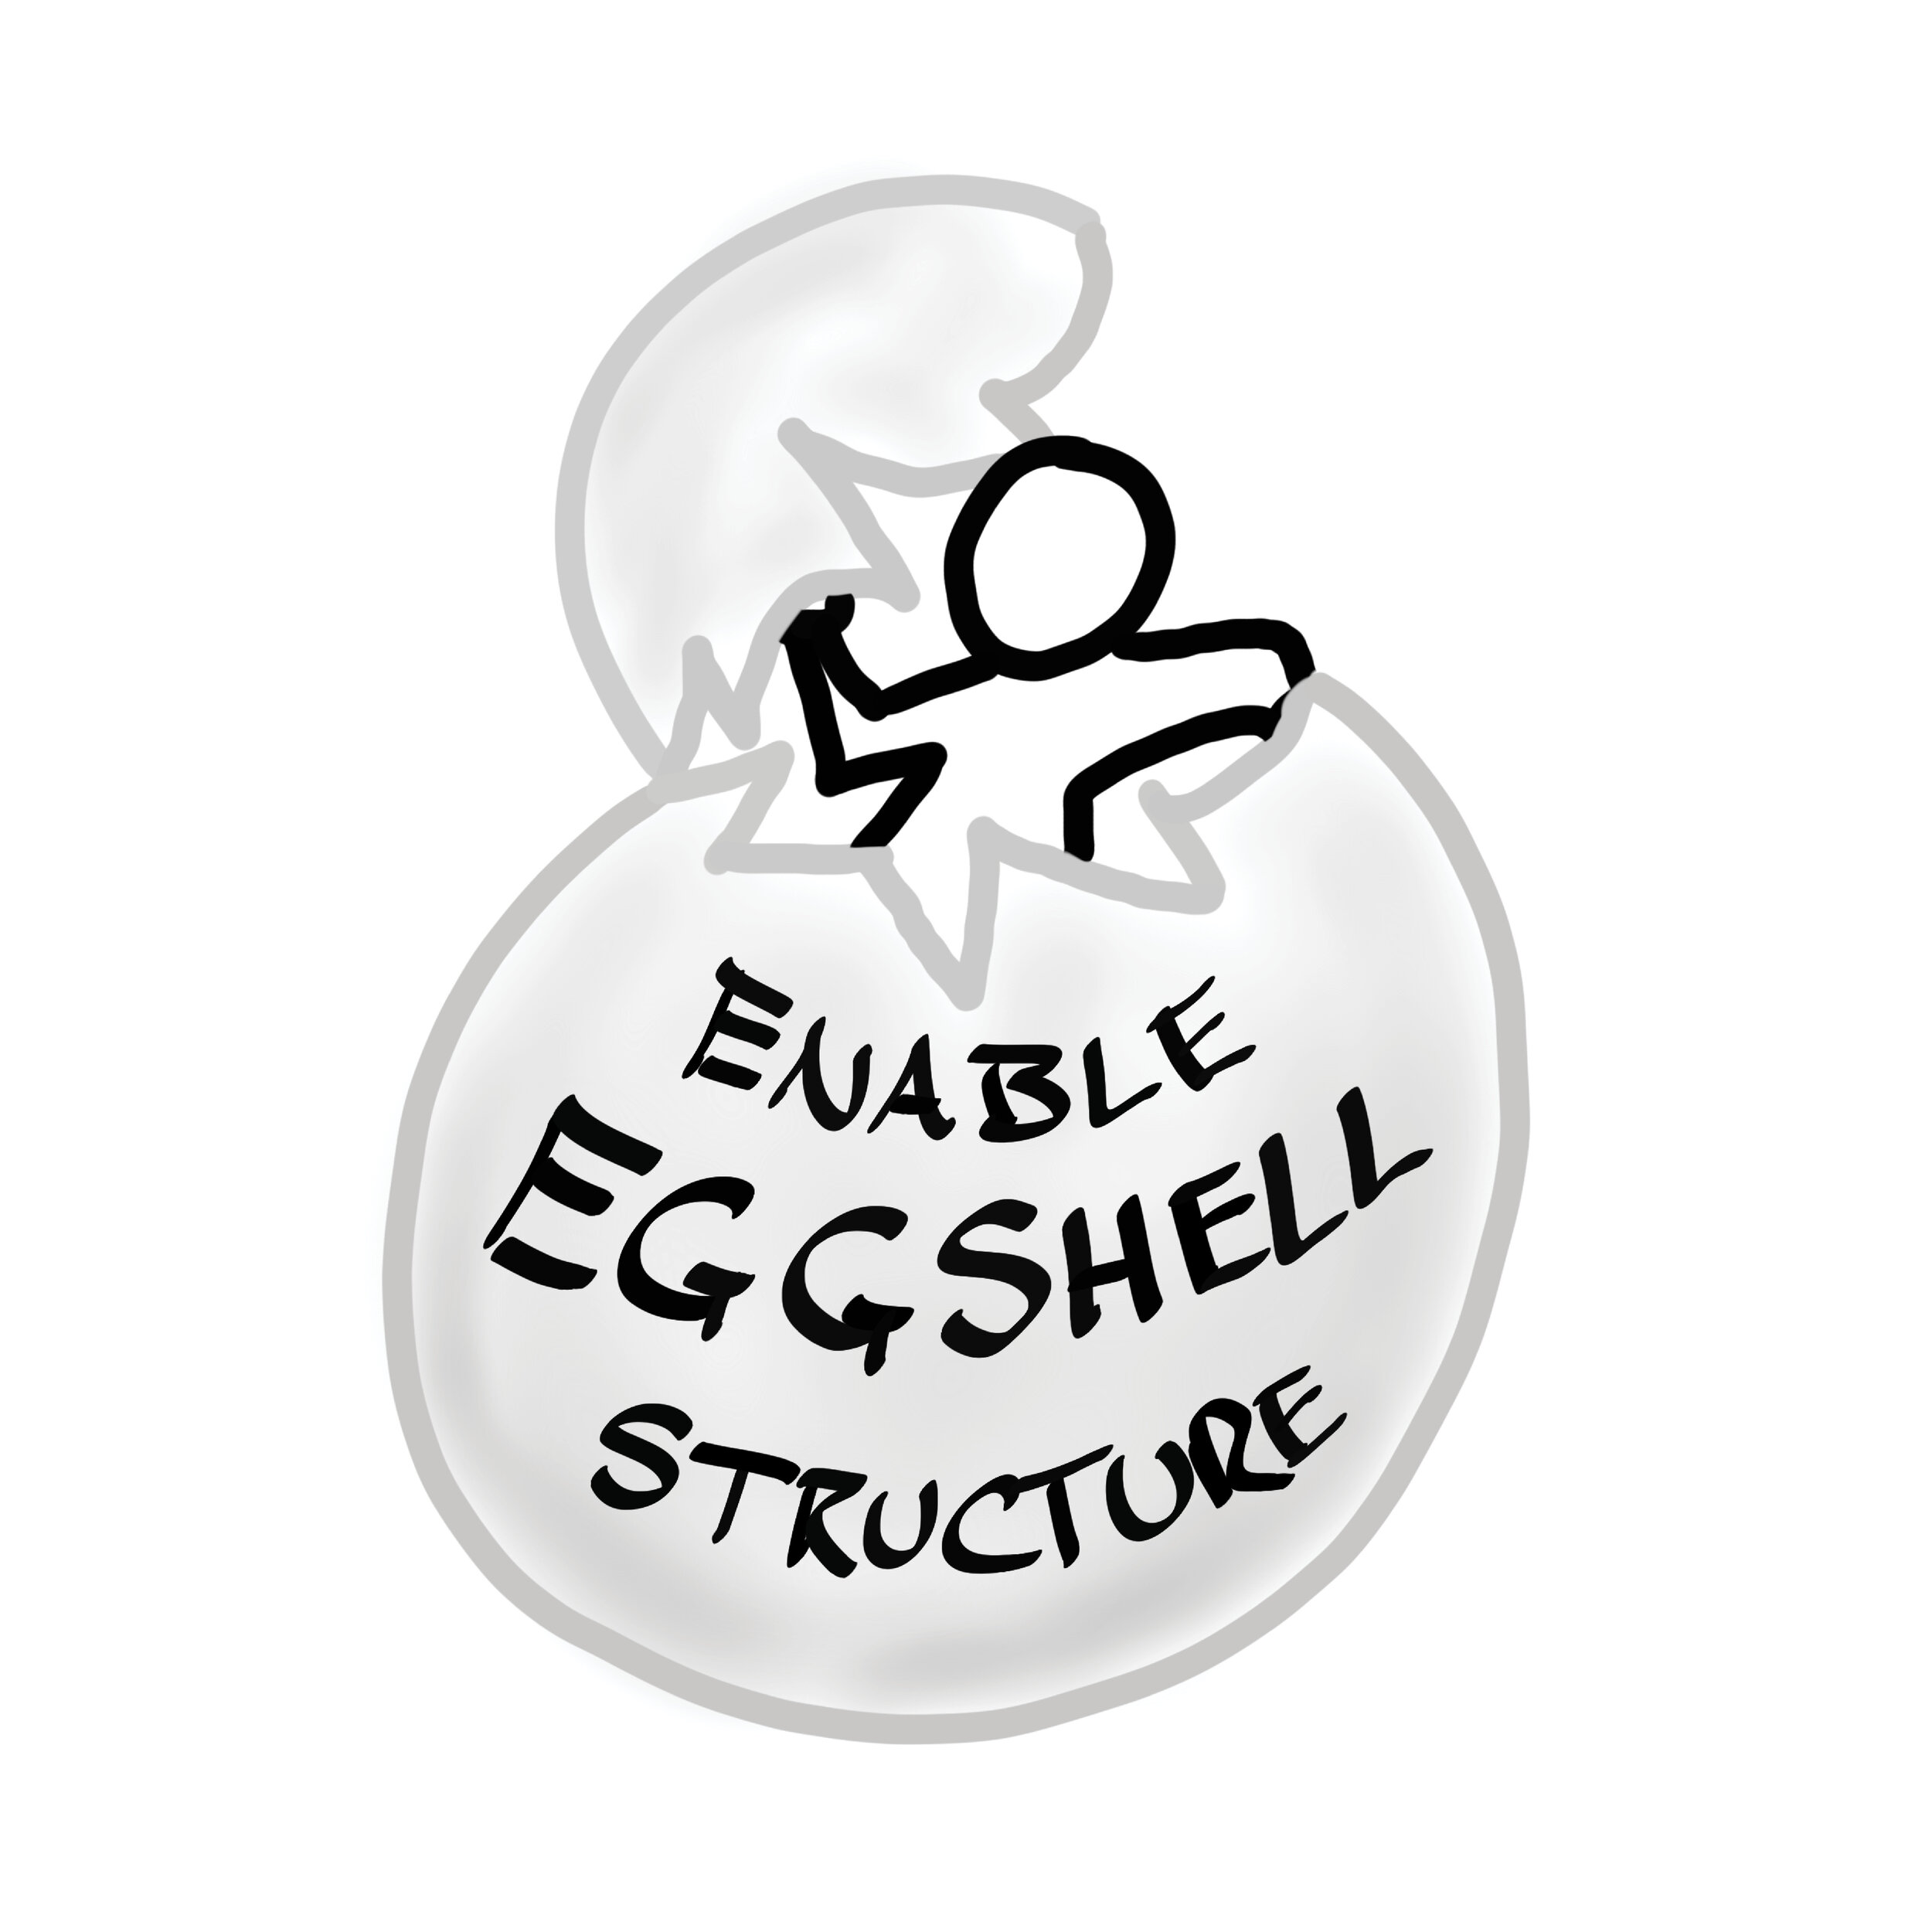 Enable eggshell structure.jpg